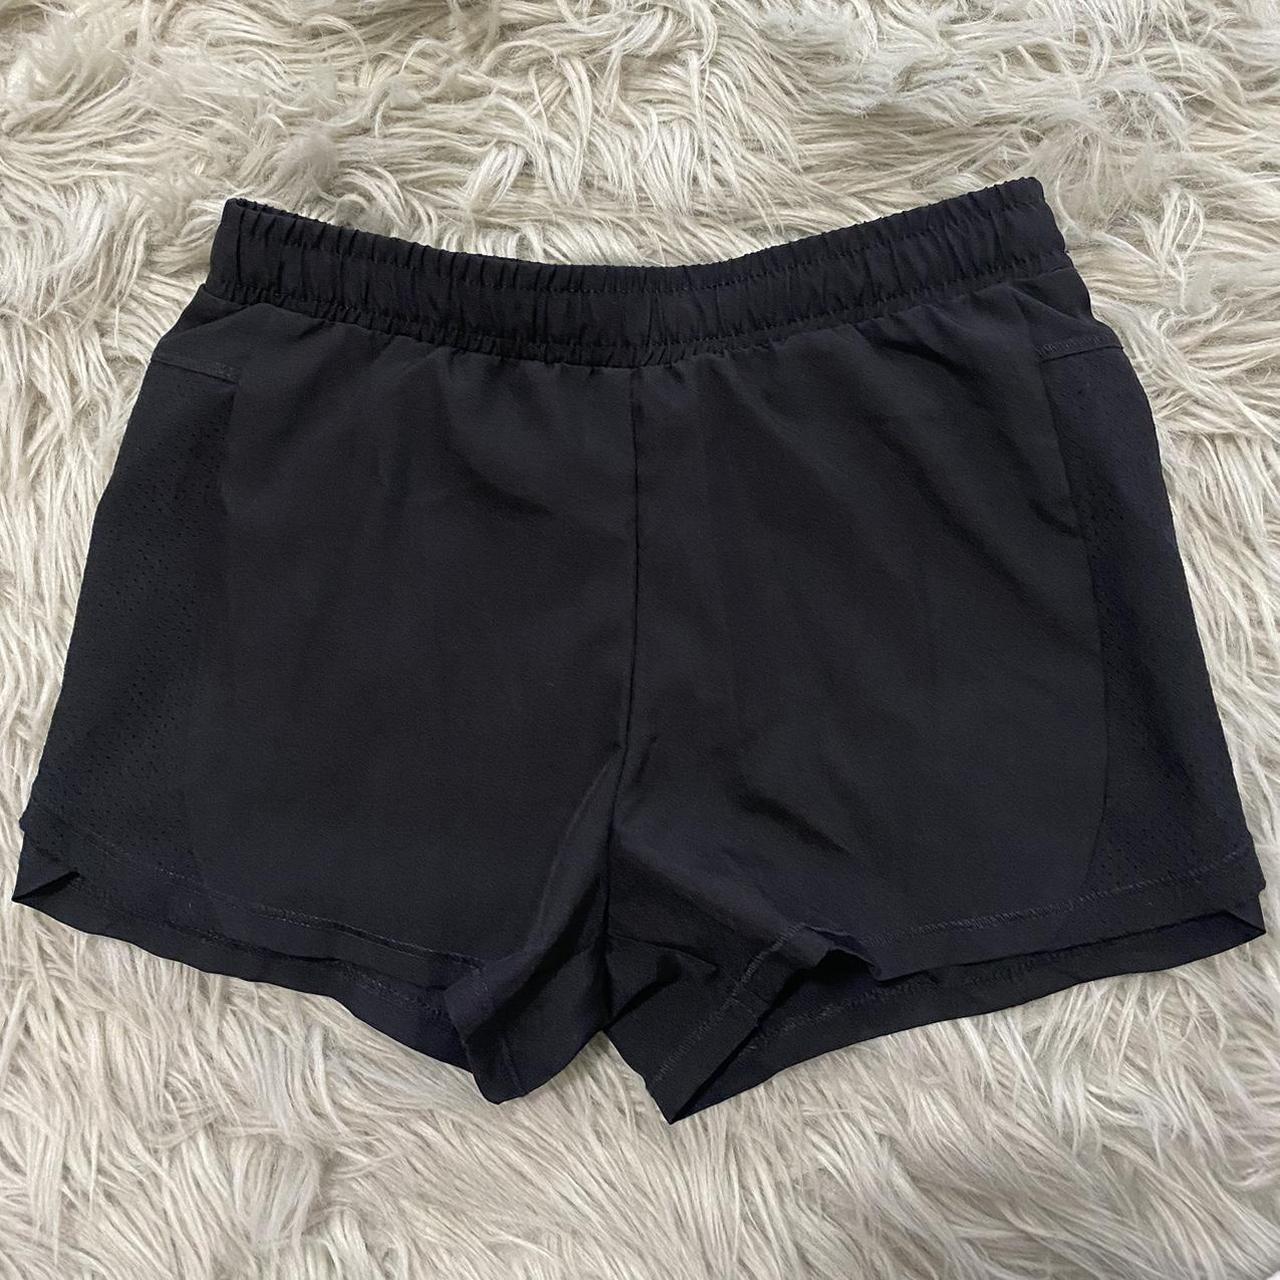 Xersion Women's Black Shorts | Depop